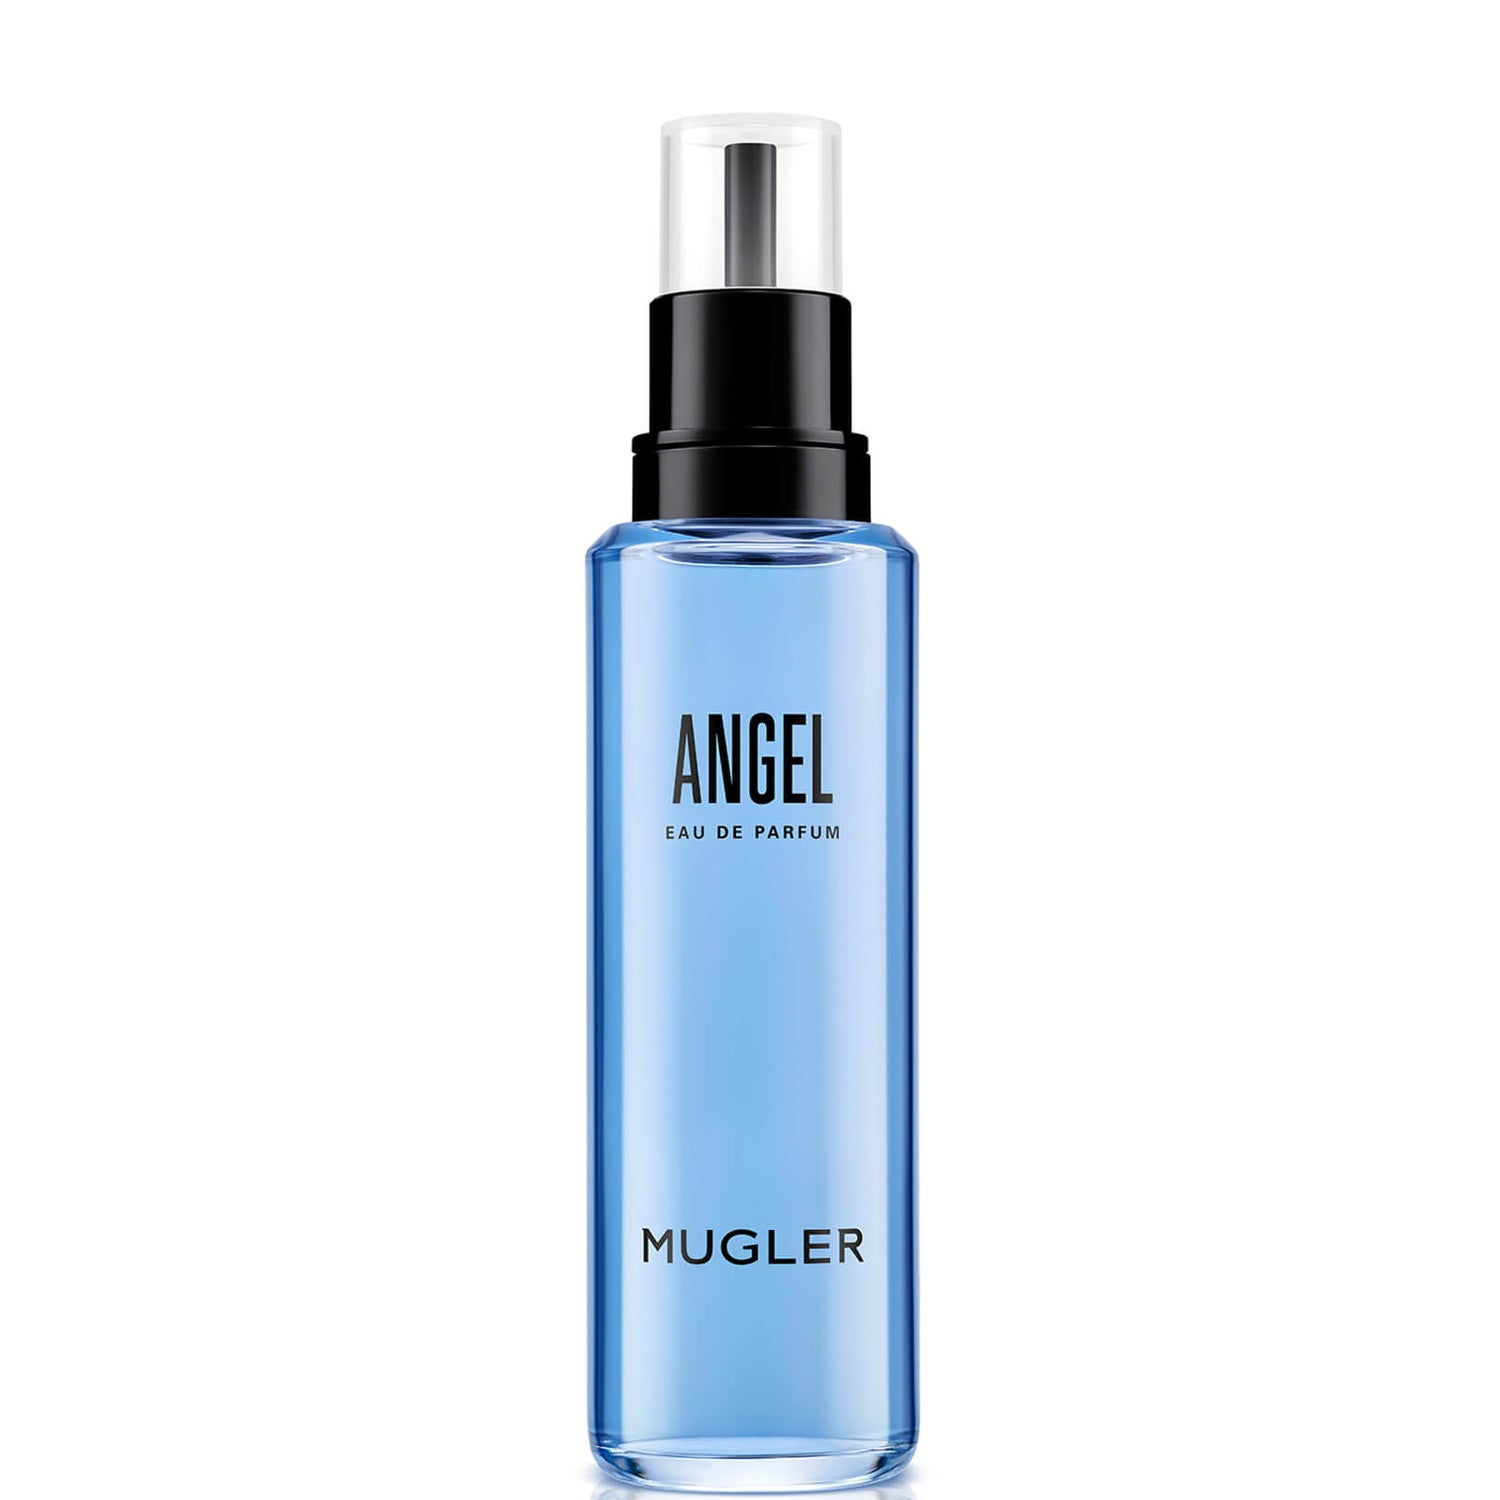 MUGLER Angel Eau de Parfum Refillable Bottle woda perfumowana w buteleczce do wielokrotnego napełniania – 100 ml